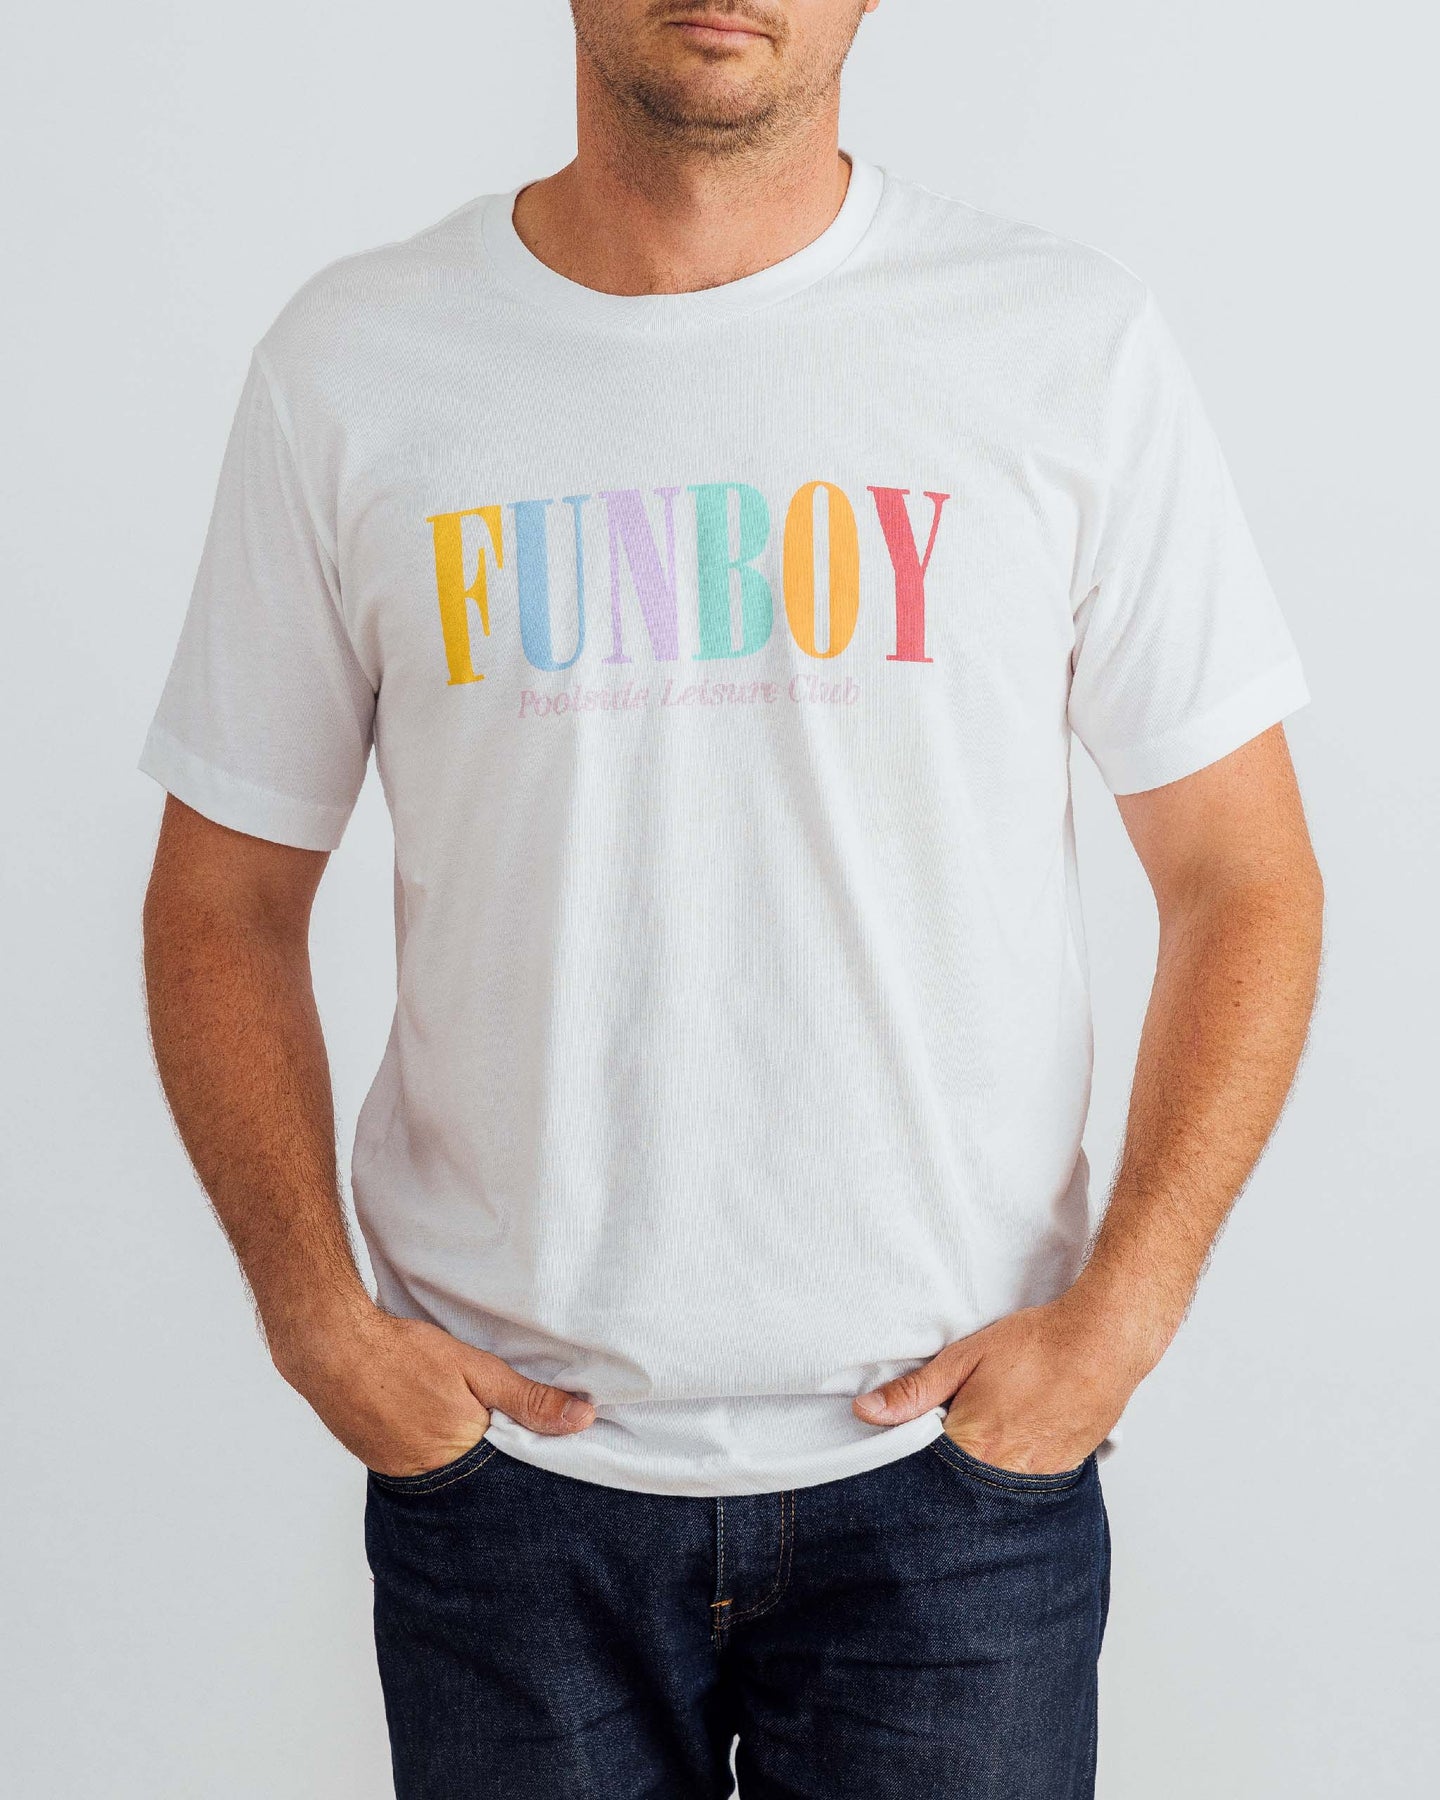 Funboy Merch - White Varsity Tee